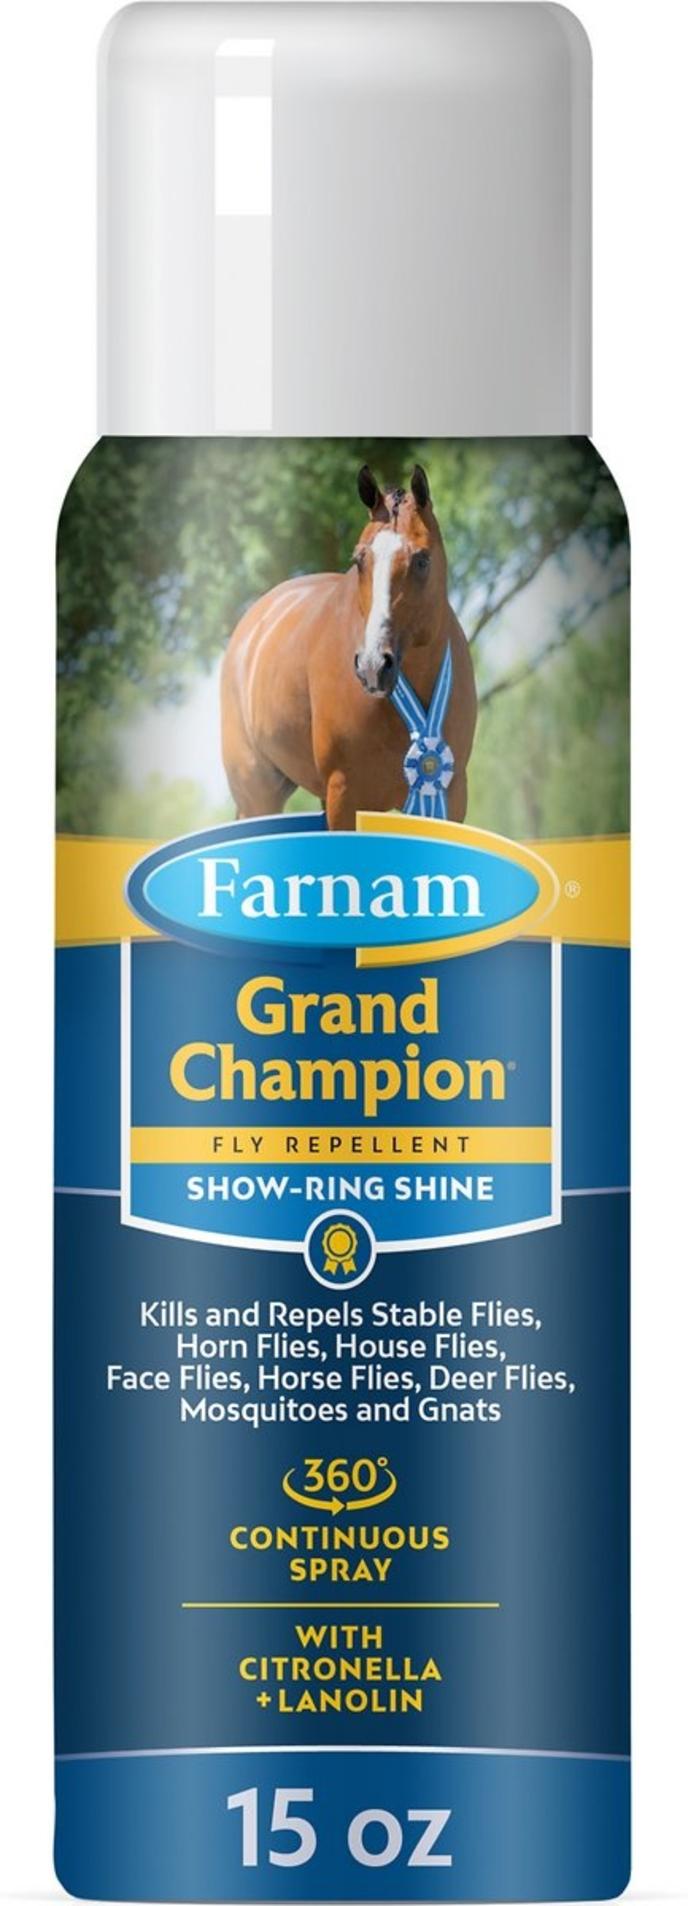 Farnam Grand Champion Fly Repellent